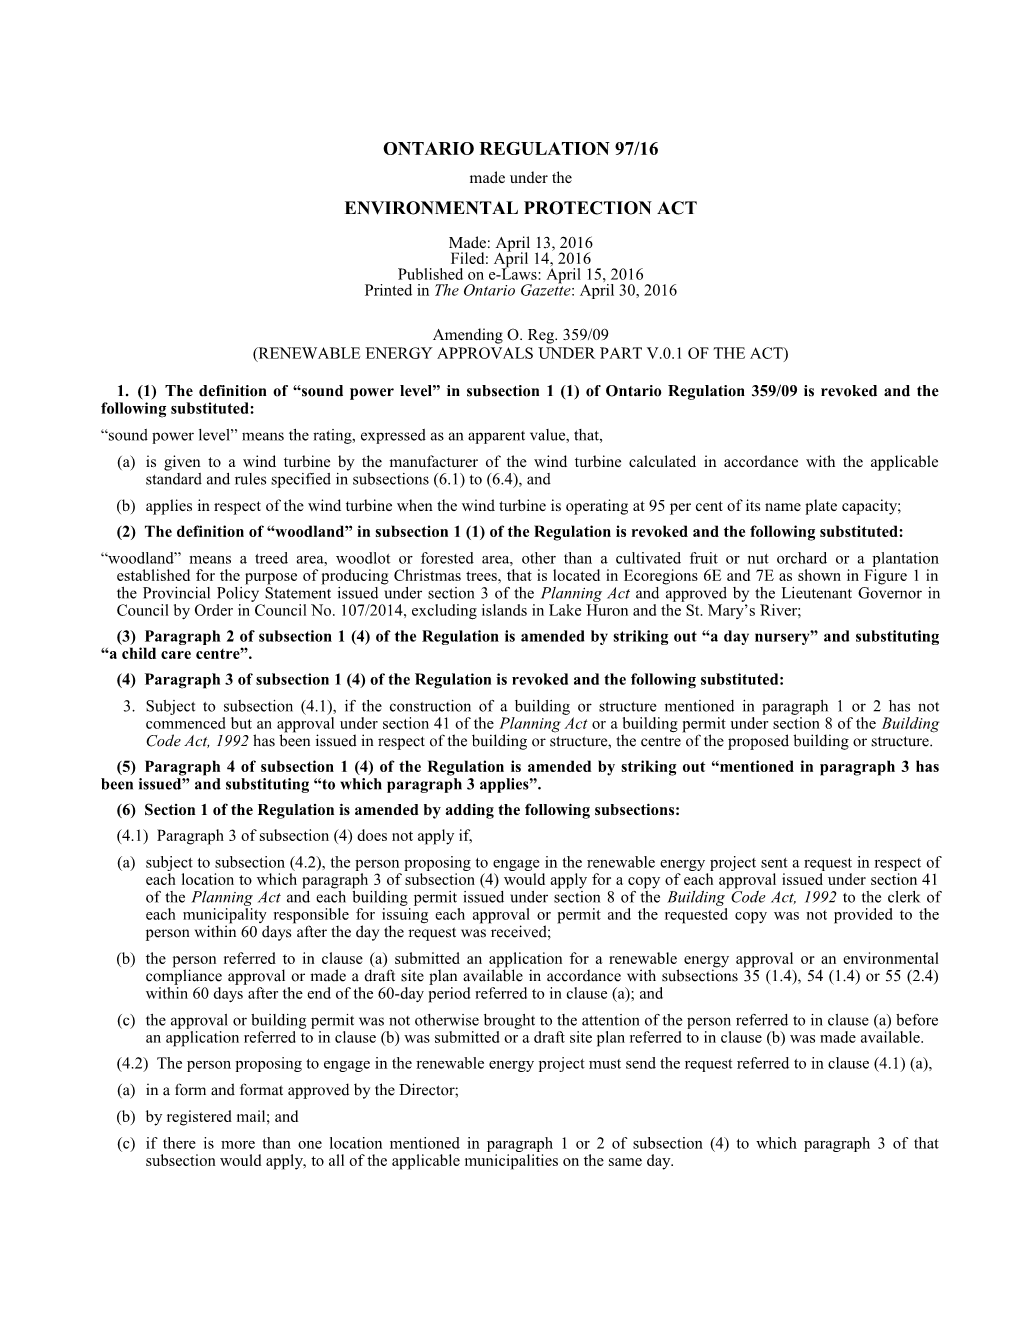 ENVIRONMENTAL PROTECTION ACT - O. Reg. 97/16